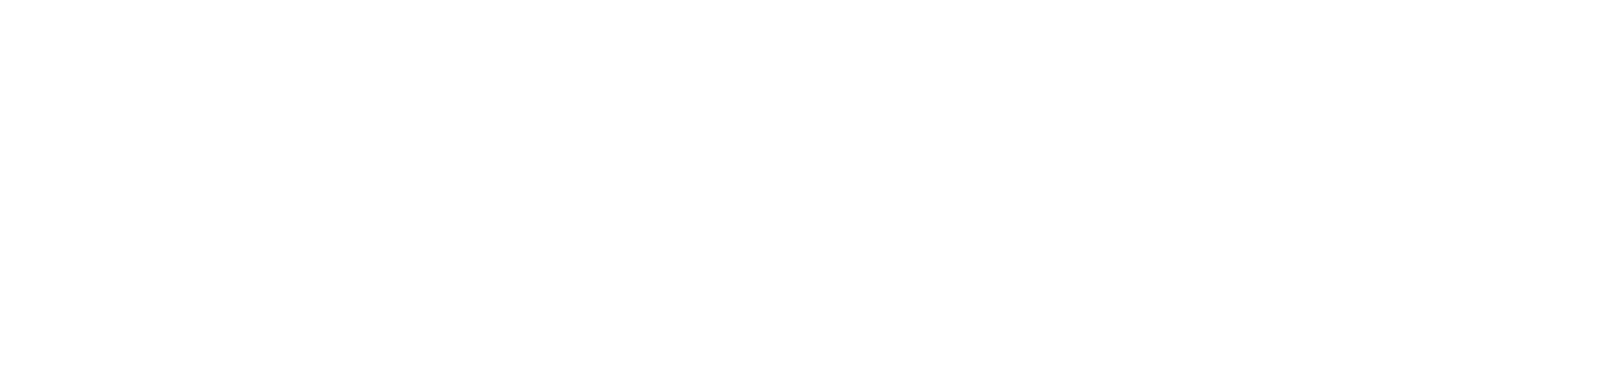 Minds Matter Cleveland - Logo - White